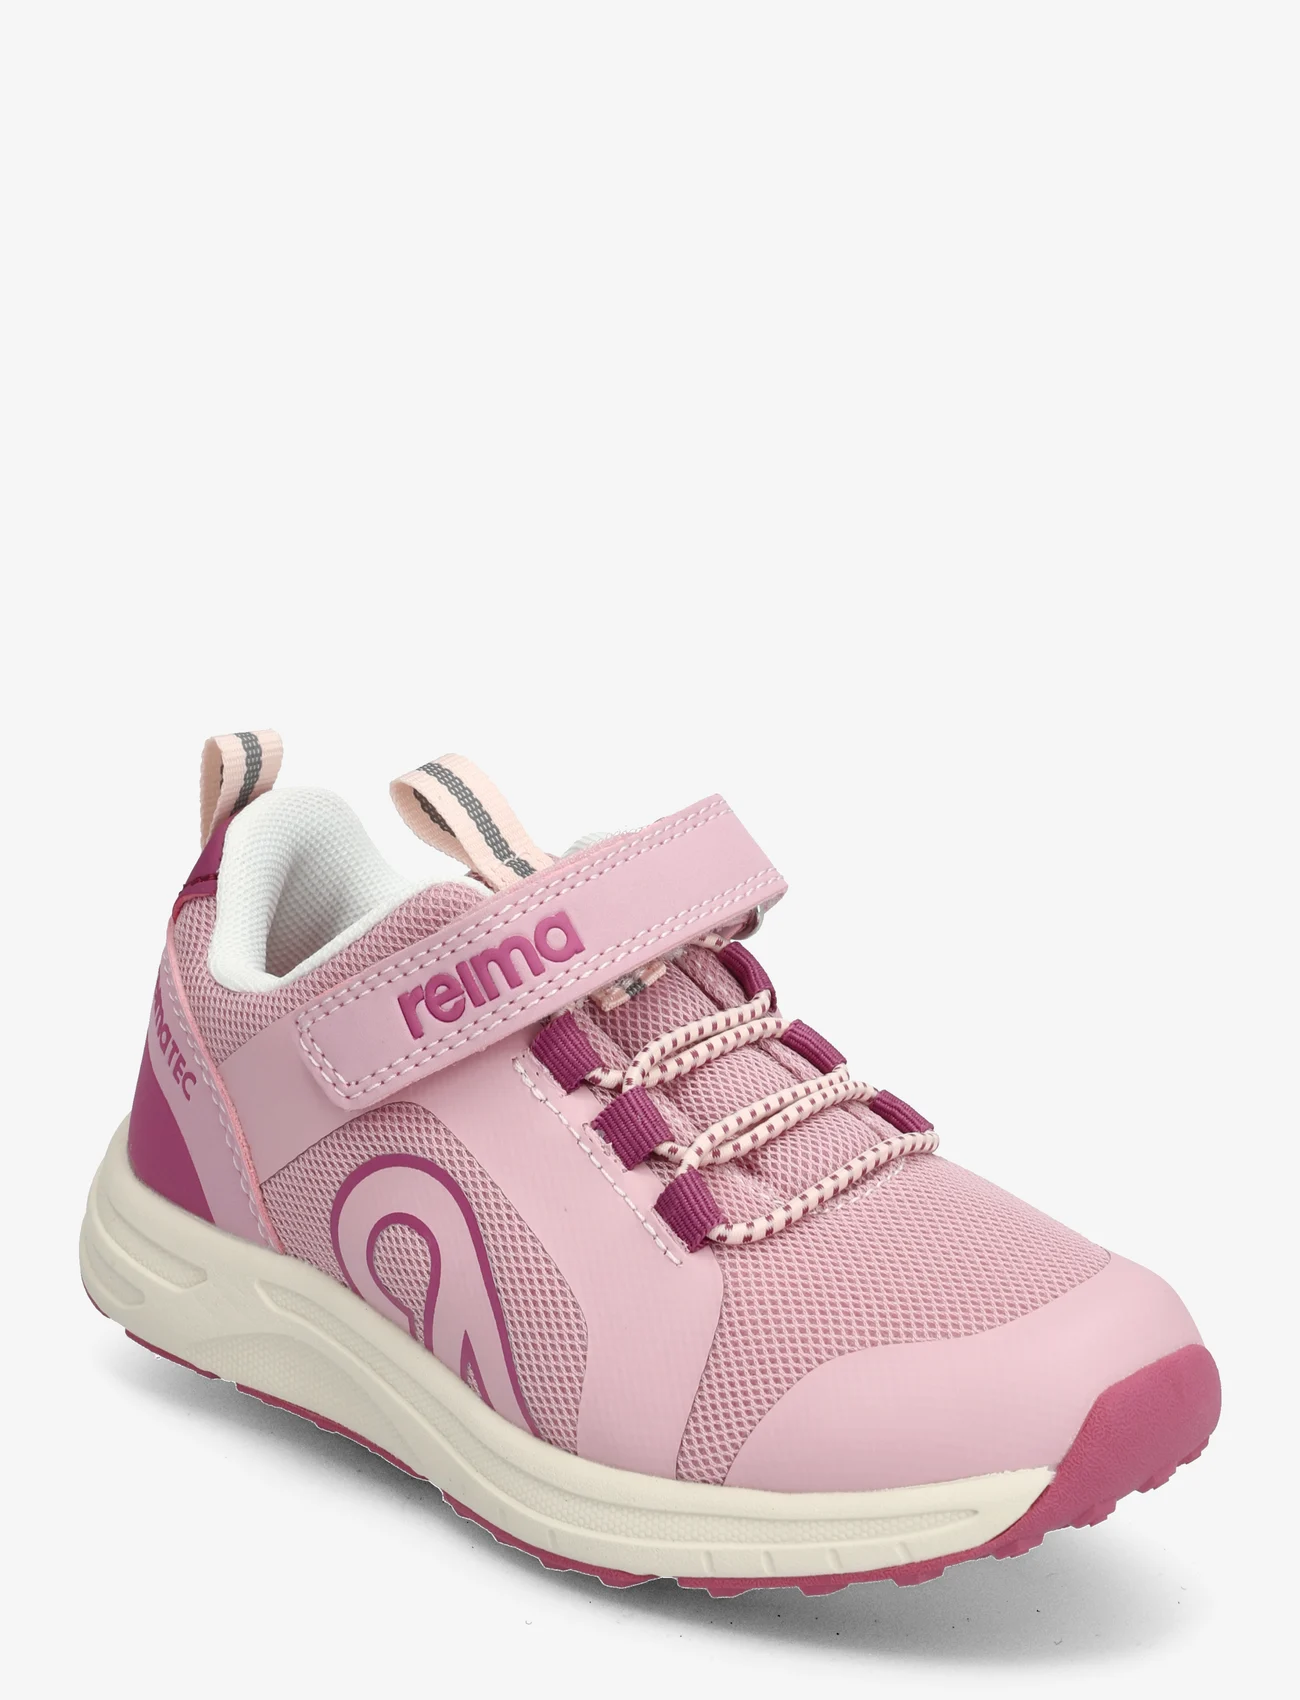 Reima - Reimatec shoes, Enkka - lapsed - grey pink - 0